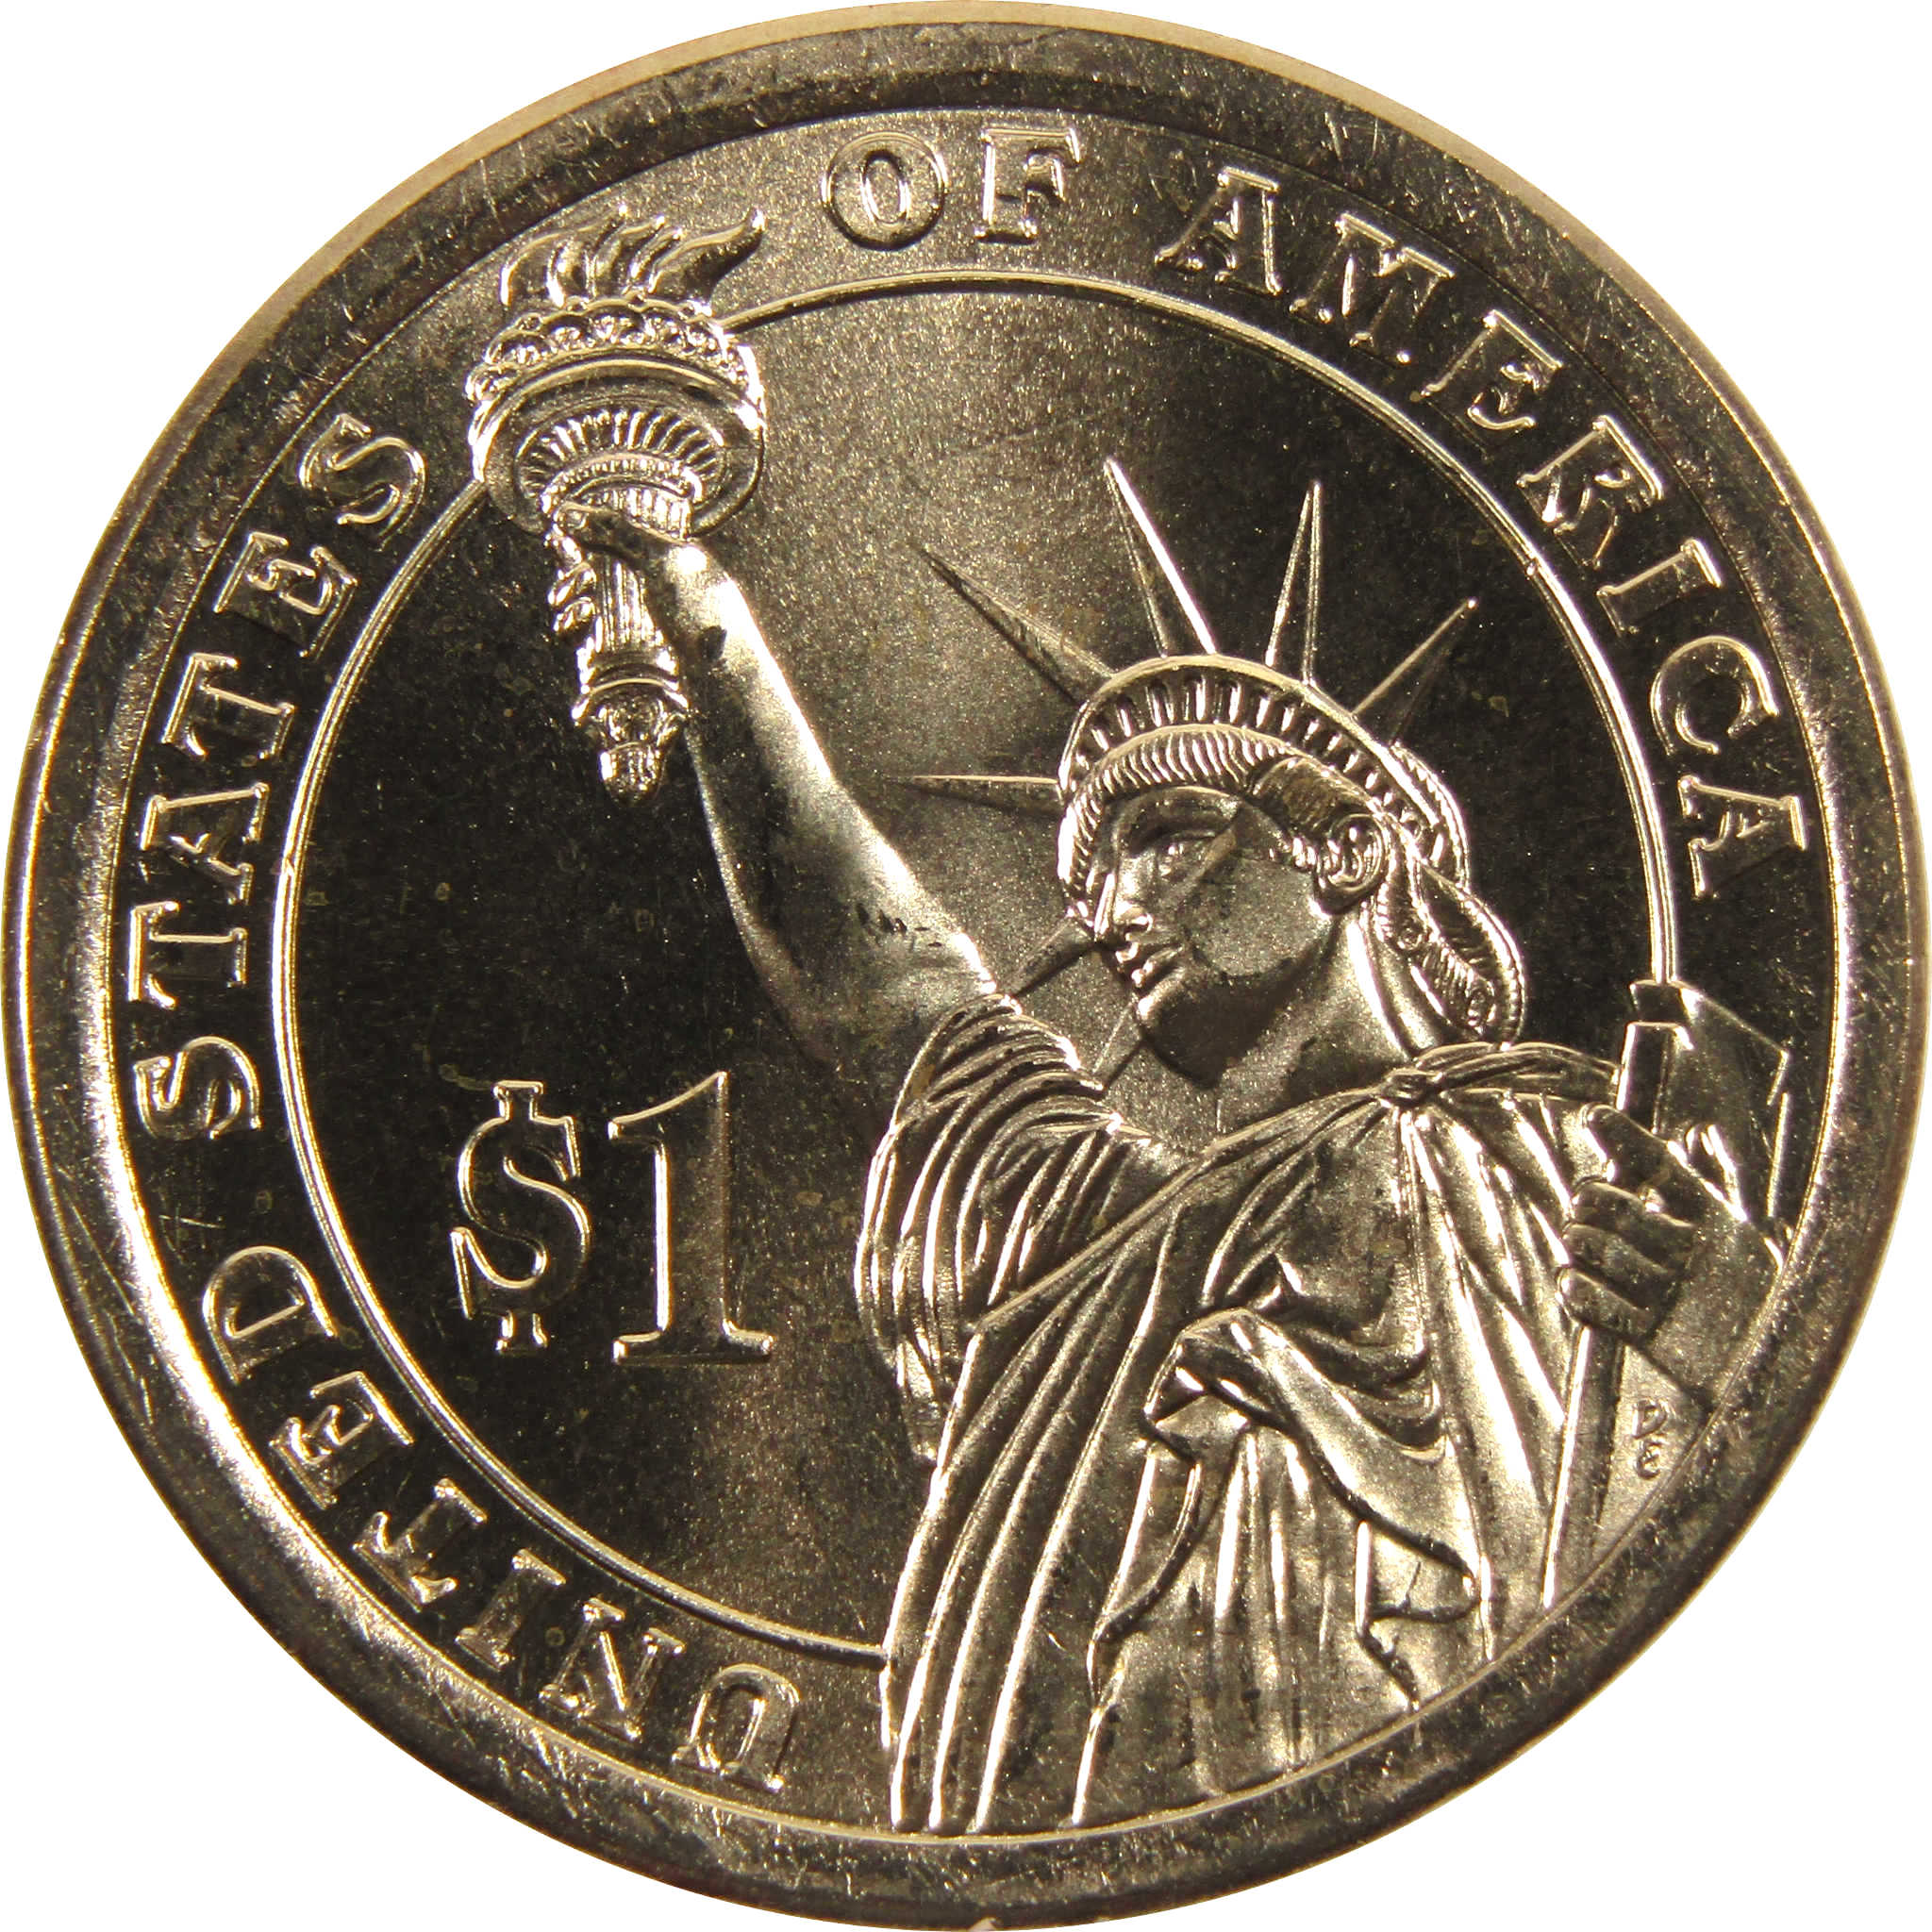 2015 D John F Kennedy Presidential Dollar BU Uncirculated $1 Coin